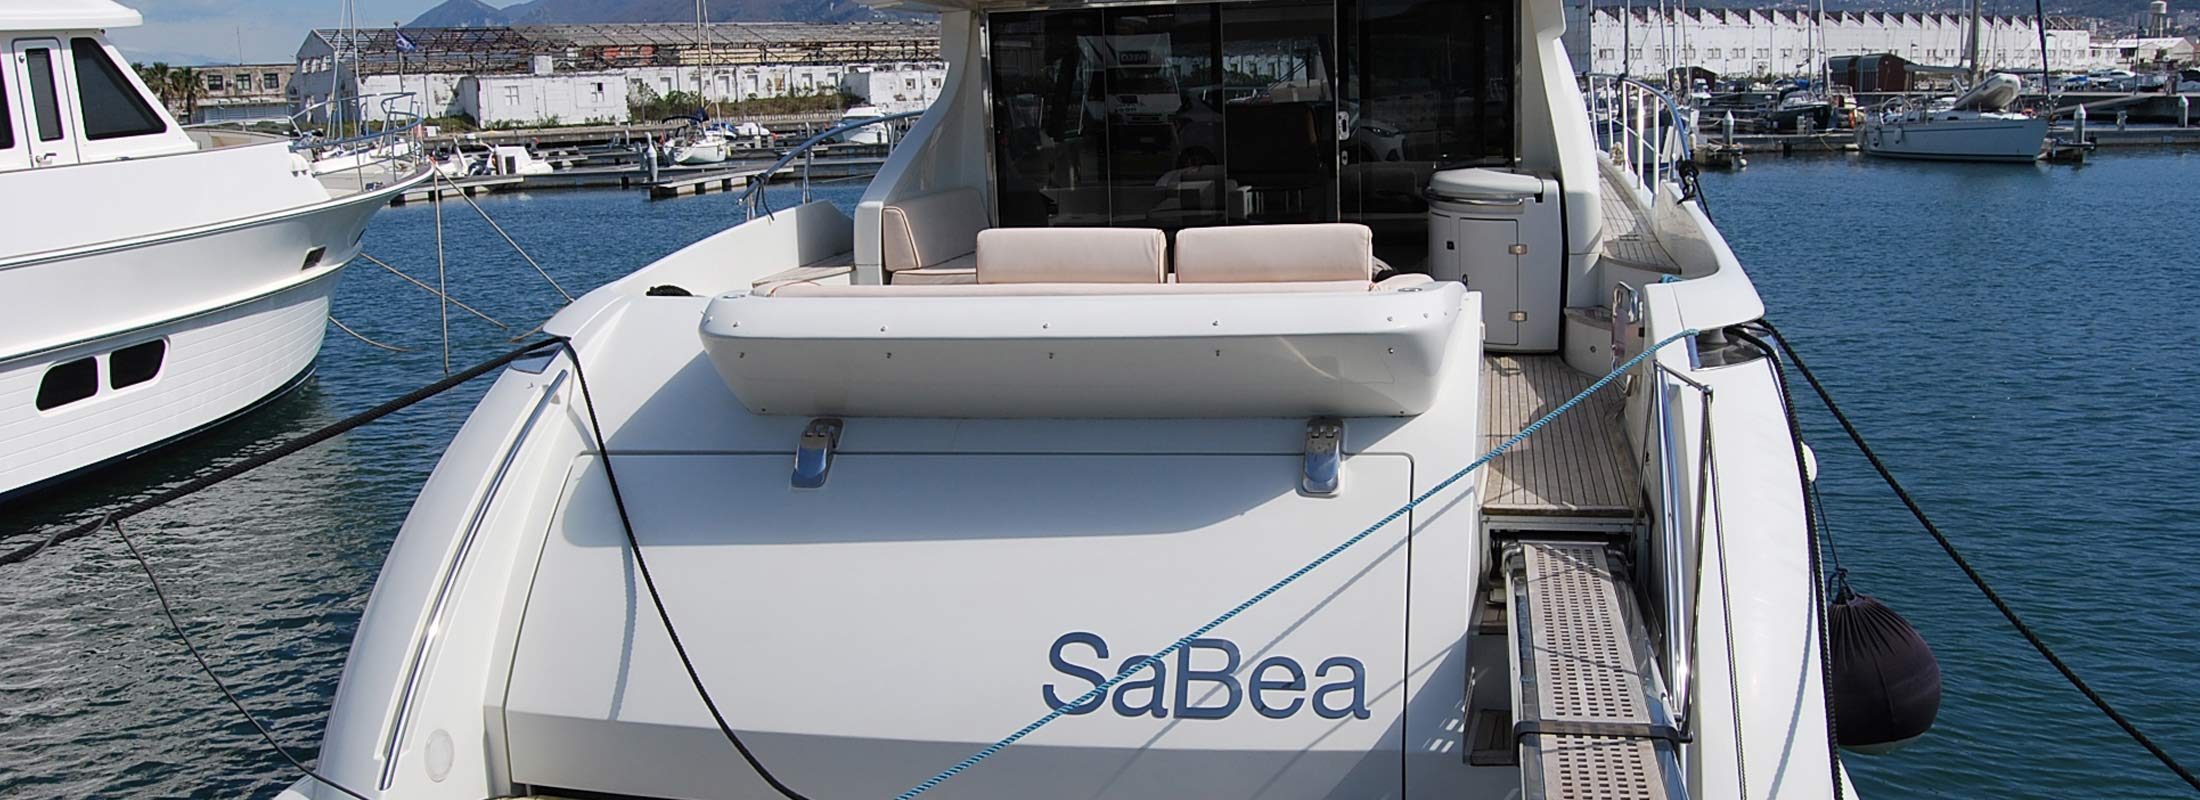 Sabea Motor Yacht for Charter Mediterranean slider 2